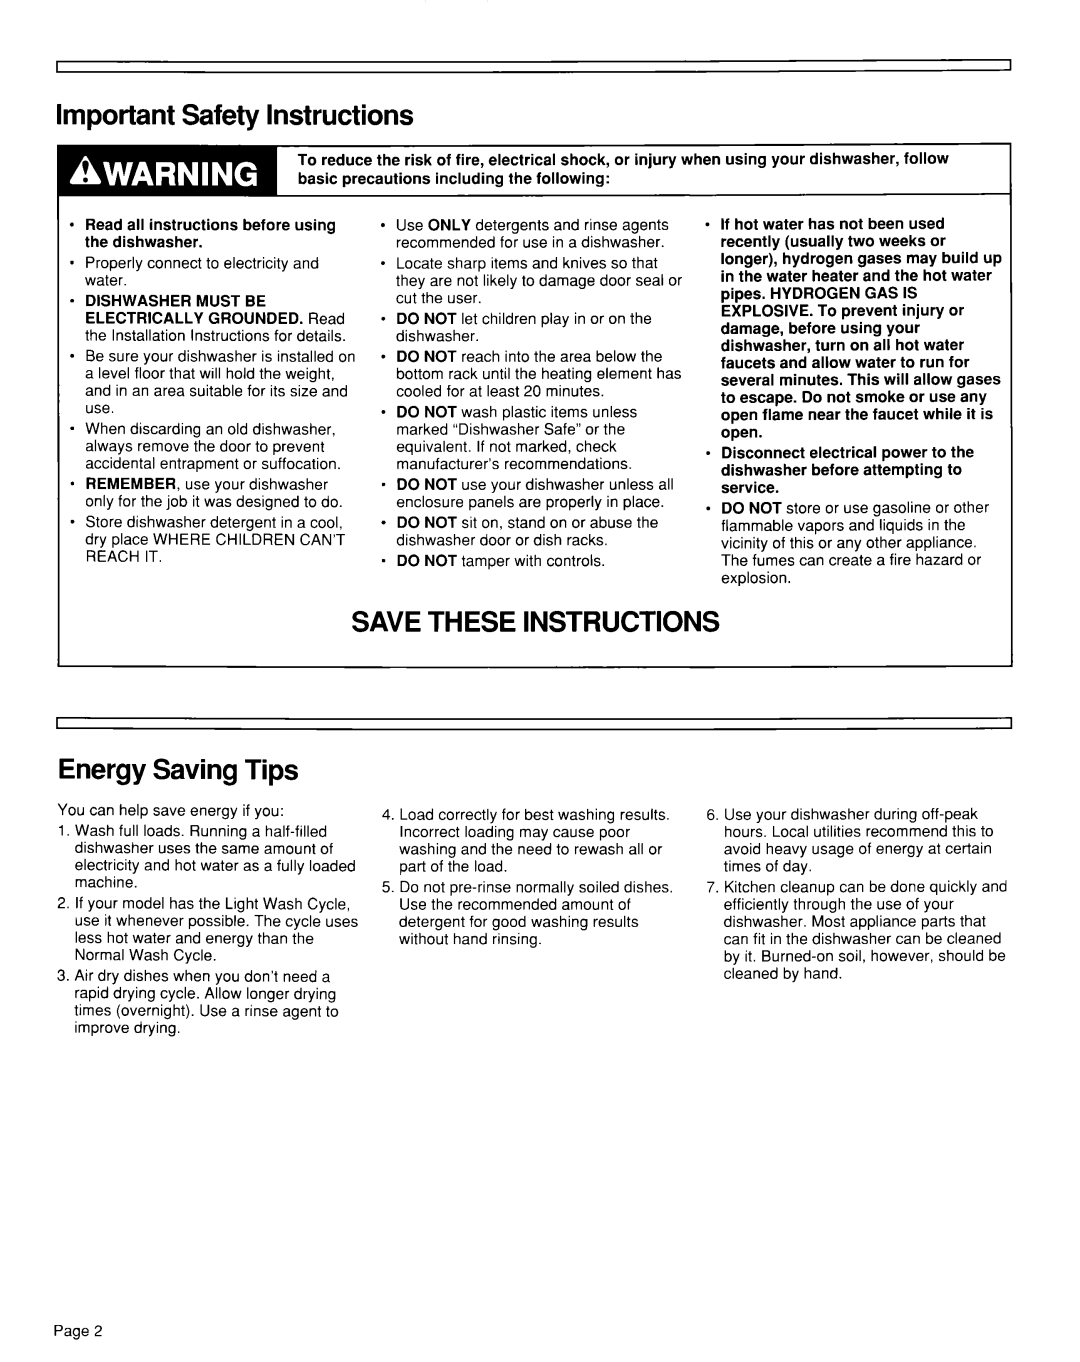 Estate Dishwasher, TUD5000Y, TUD2000W, 119 Important Safety Instructions, Save These Instructions, Energy Saving Tips 